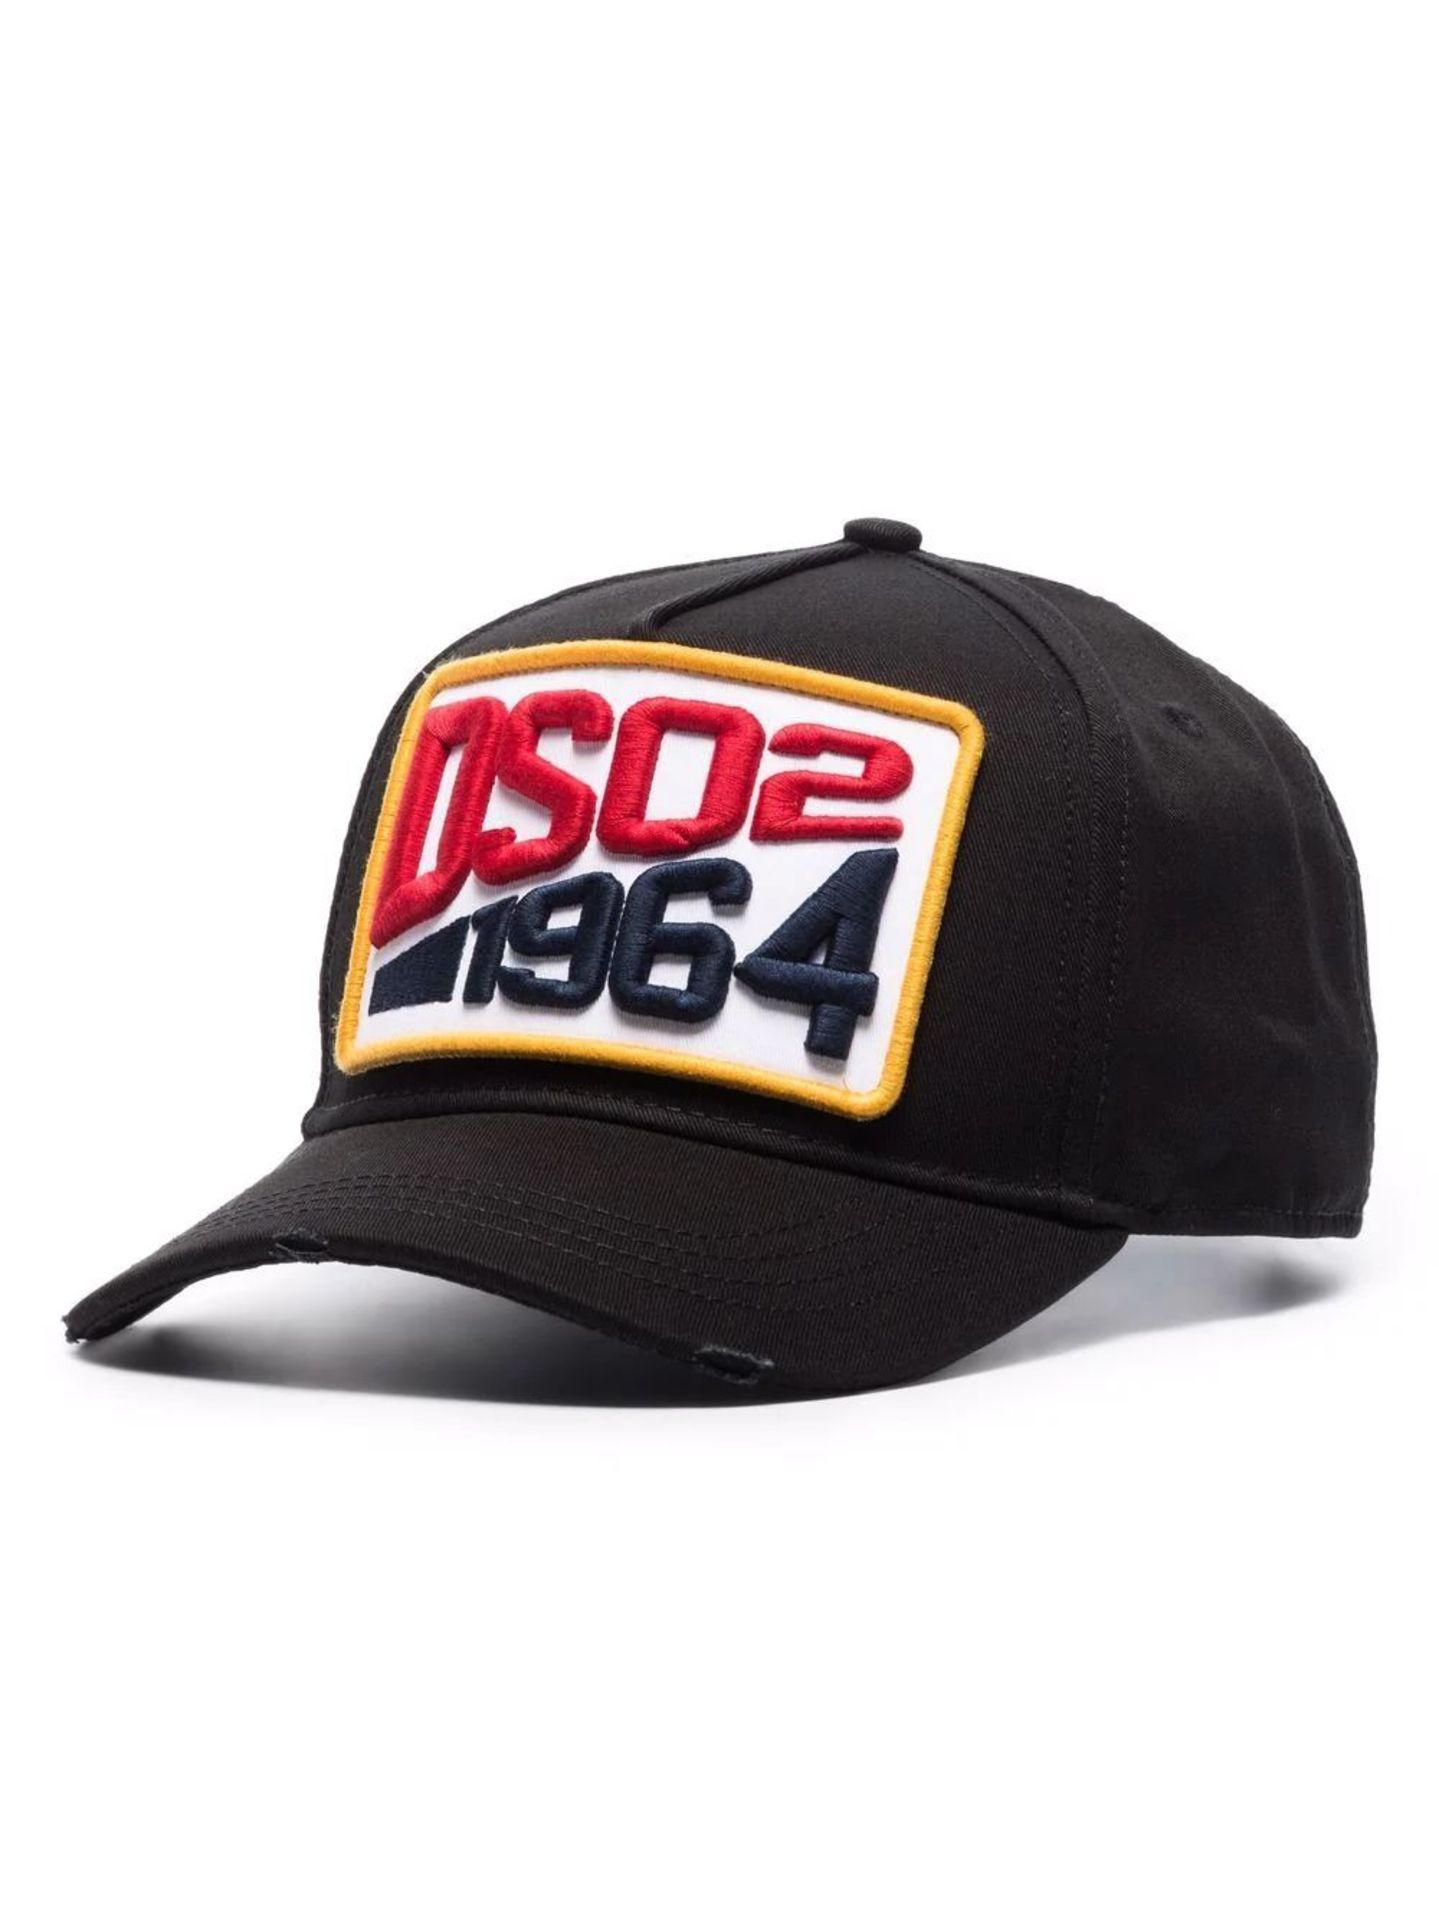 BRAND NEW DSQUARED2 DSQ 1964 Patch Logo Cap - Black. RRP £165. (SR)